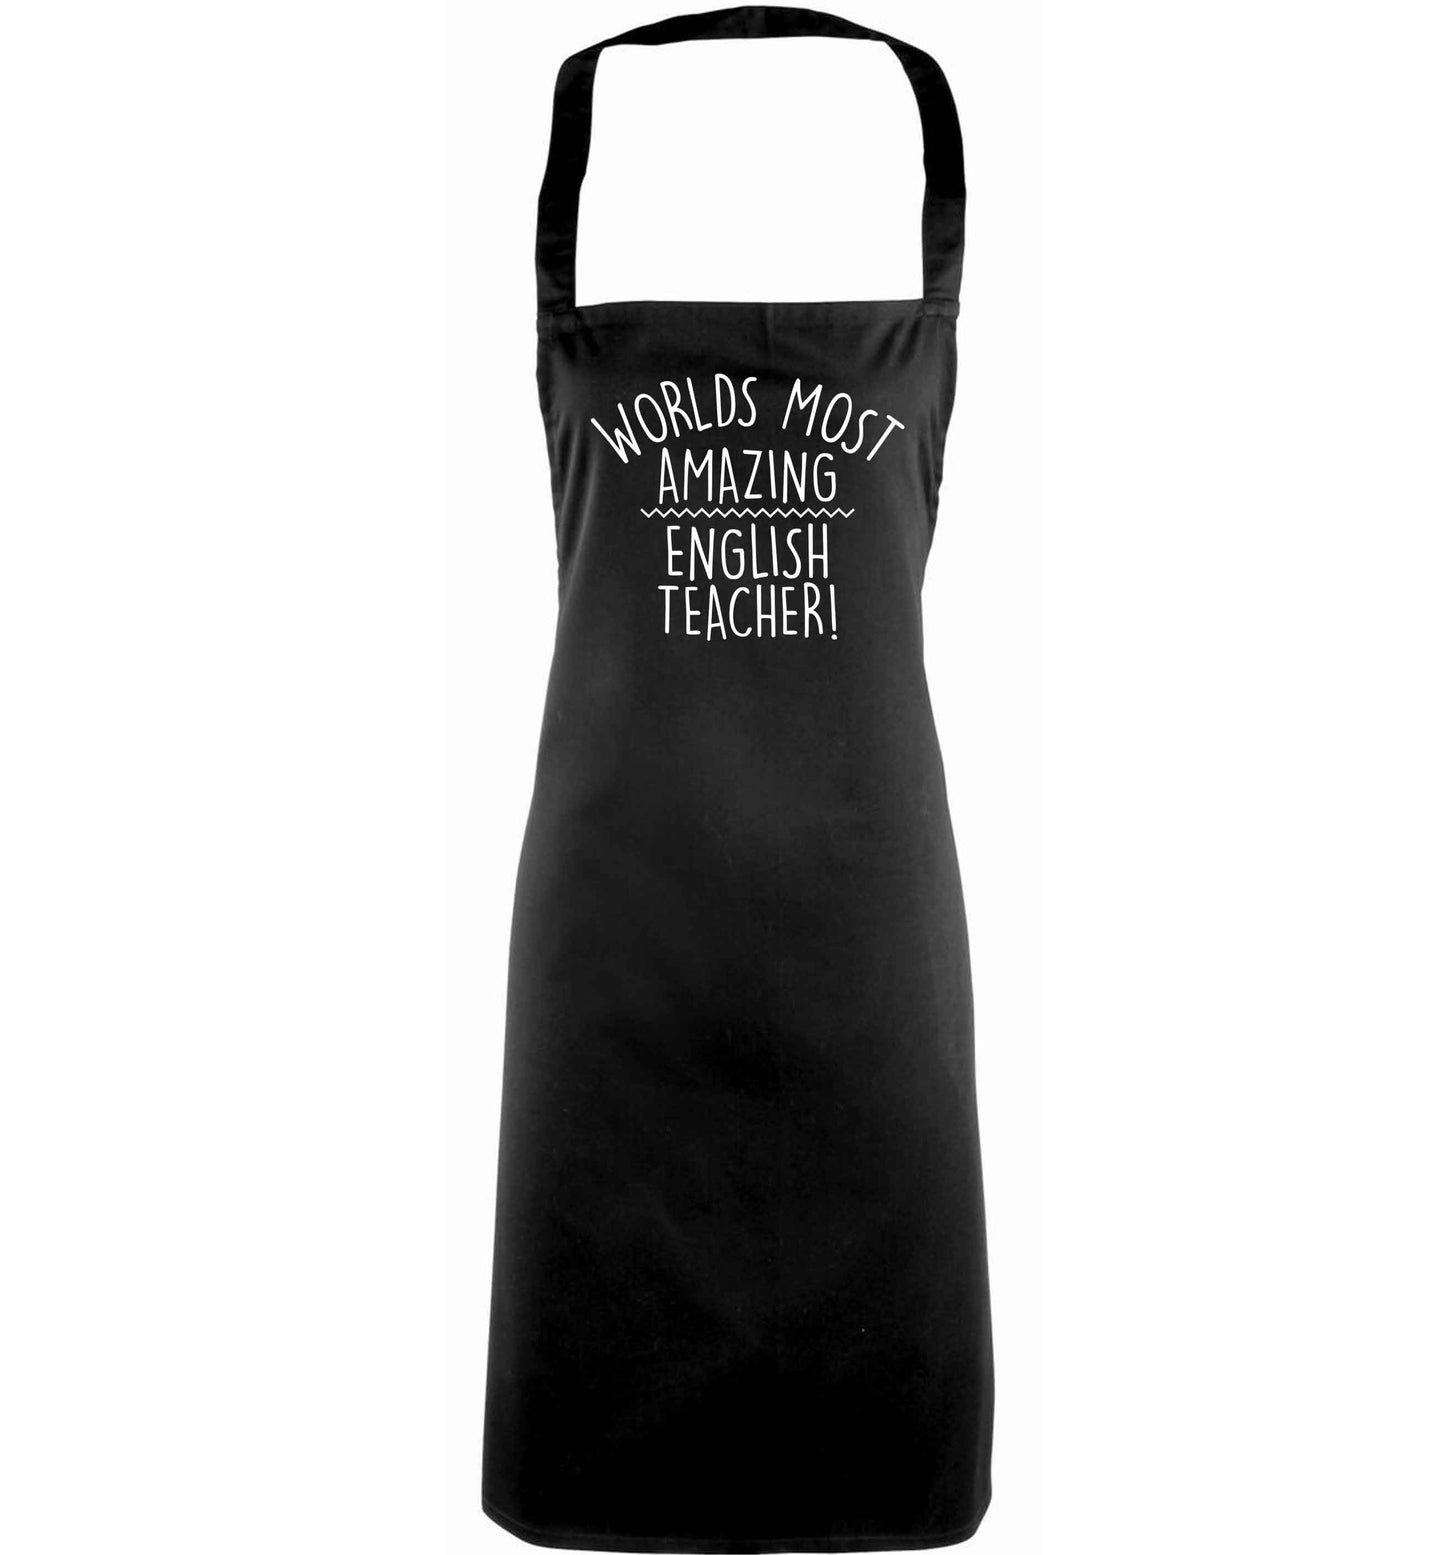 Worlds most amazing English teacher adults black apron